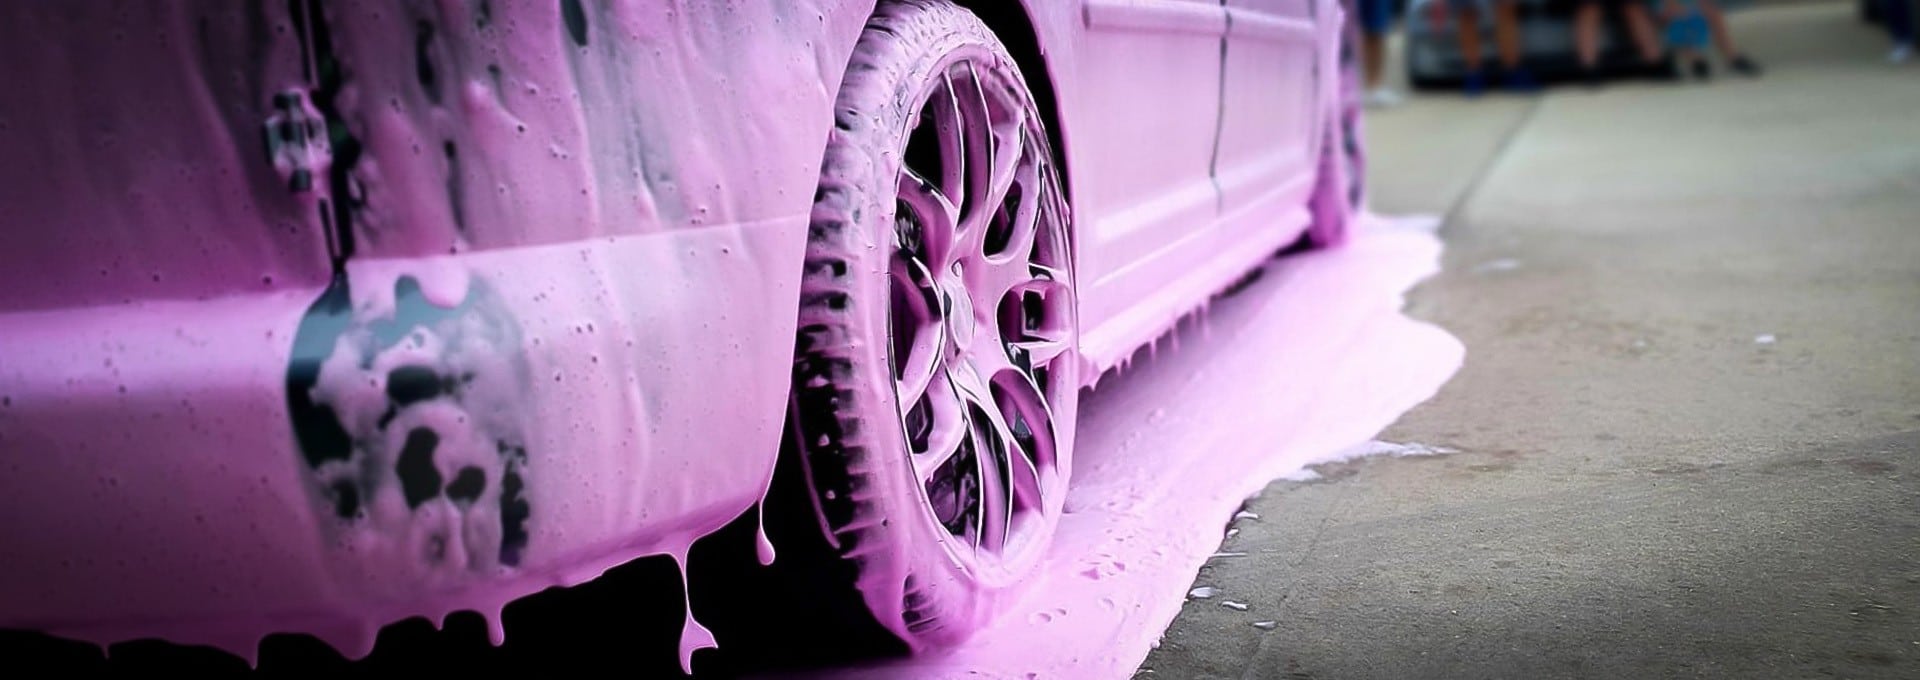 snow foam espuma Colo fucsia purple rosado pink